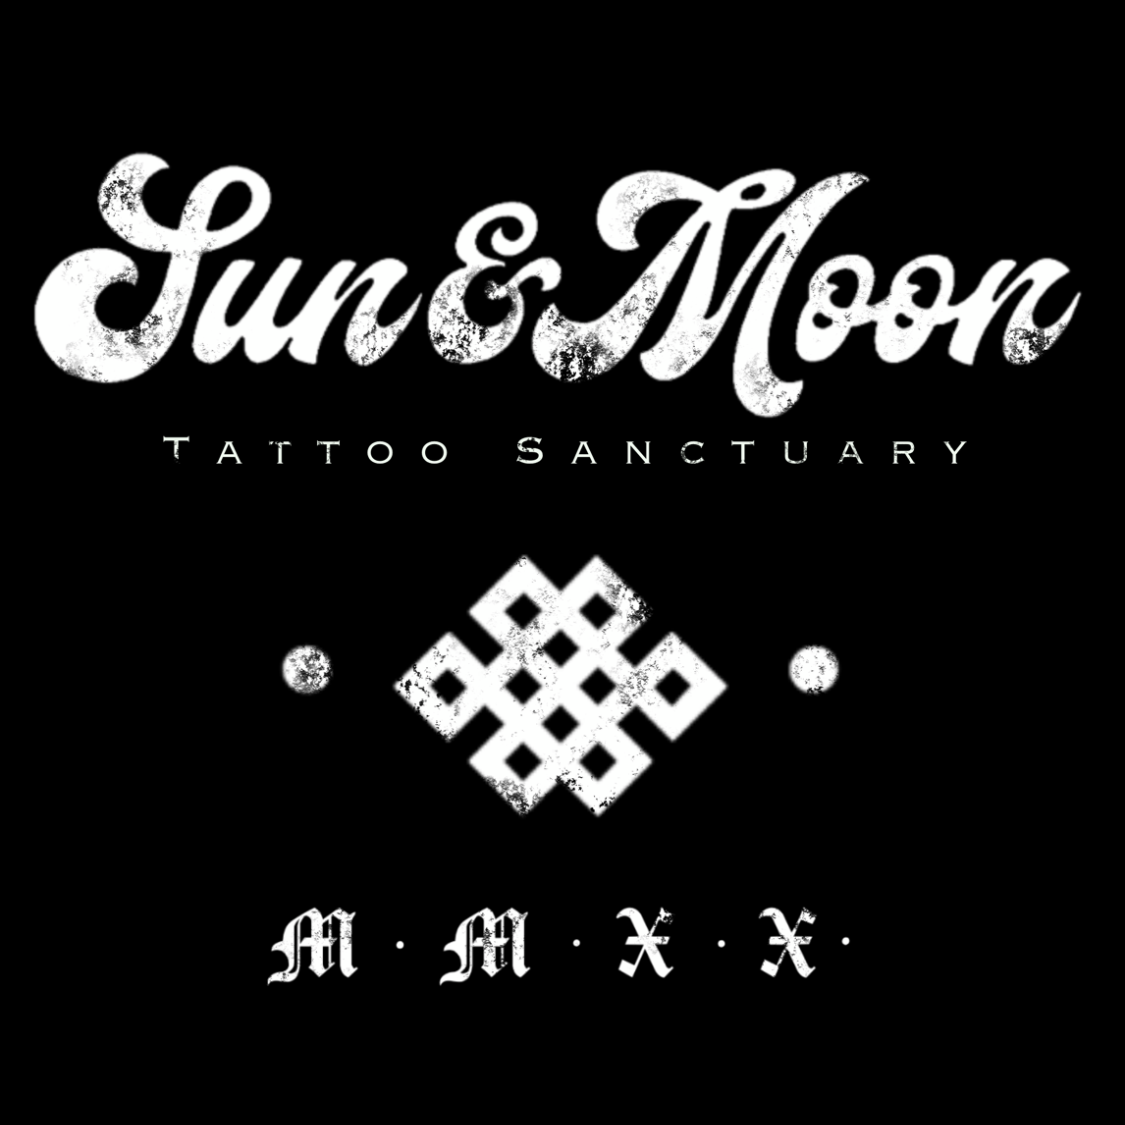 Sun and Moon Tattoo Sanctuary